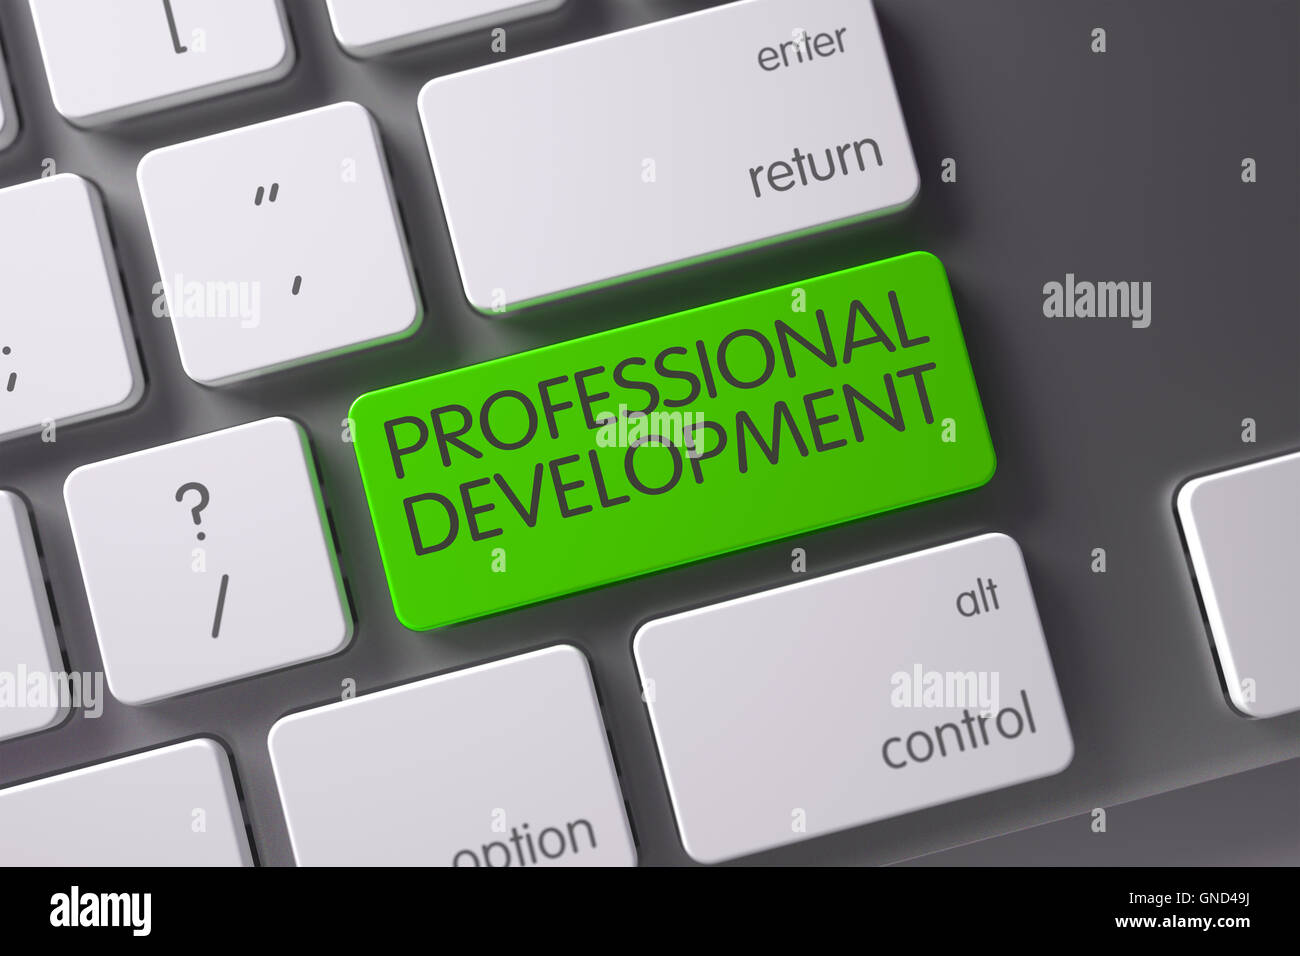 Professional Development Key. 3D Rendering. Stock Photo